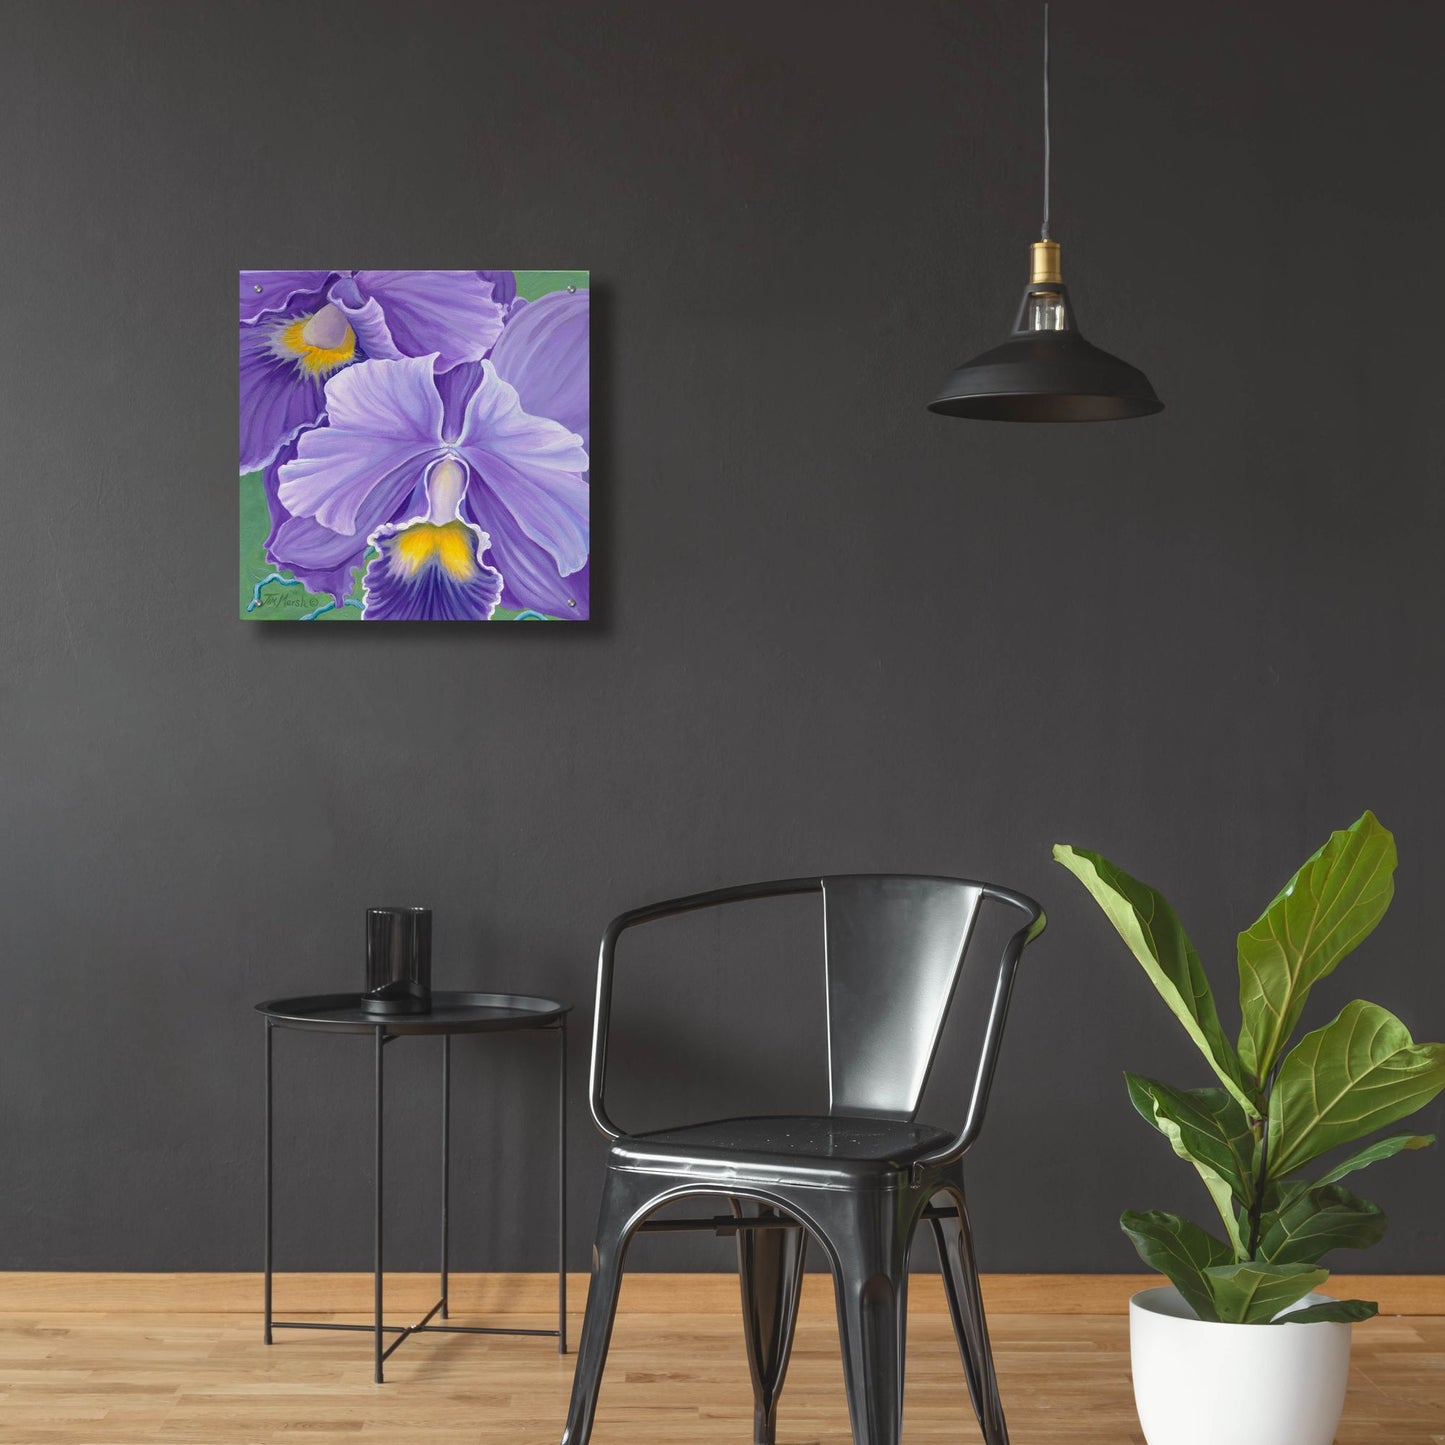 Epic Art 'Orchid Series 3' by Tim Marsh, Acrylic Glass Wall Art,24x24